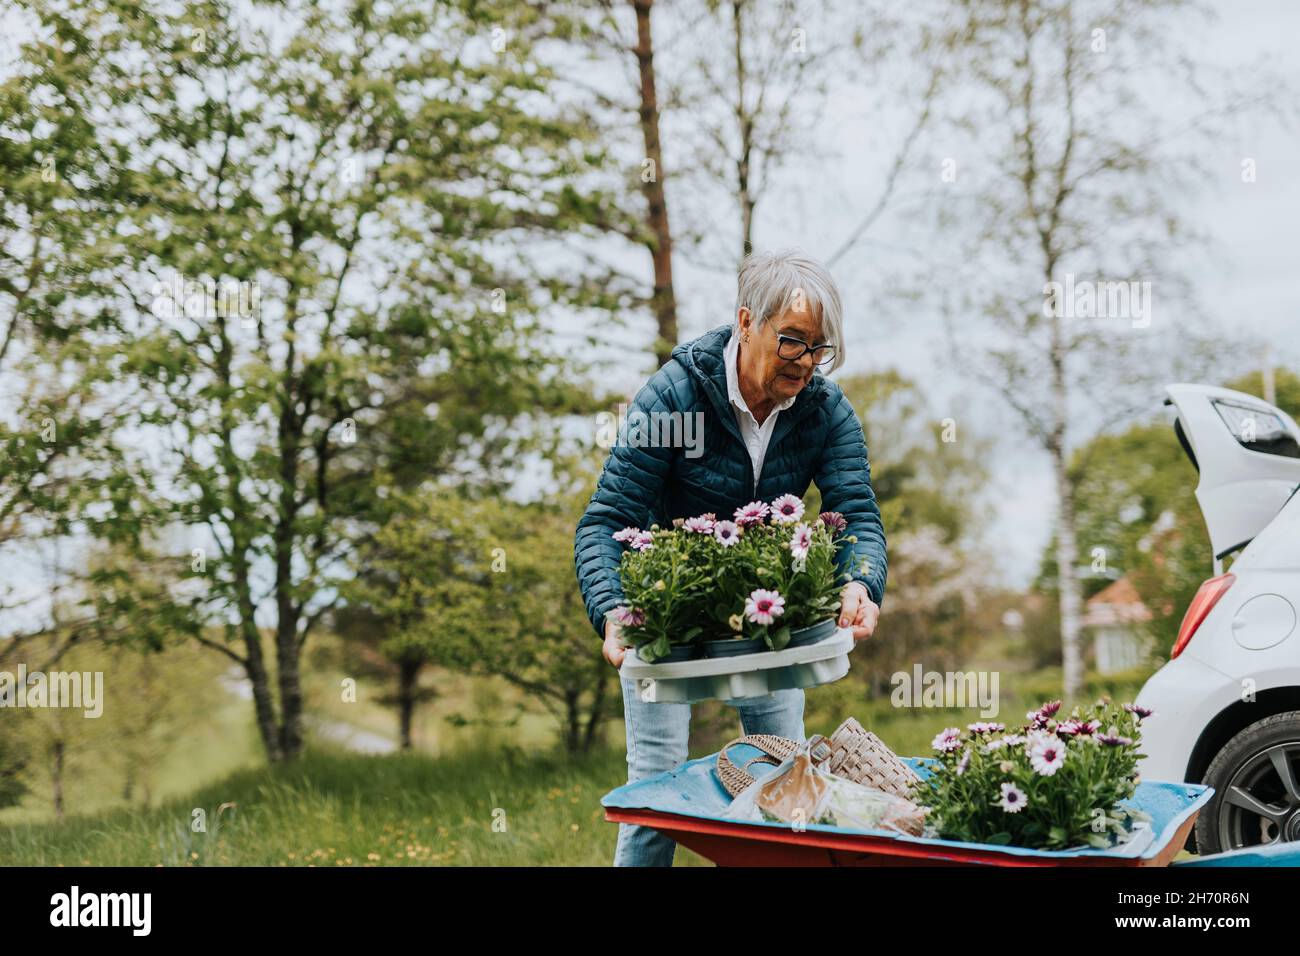 Woman loading flowers on wheelbarrow Stock Photo